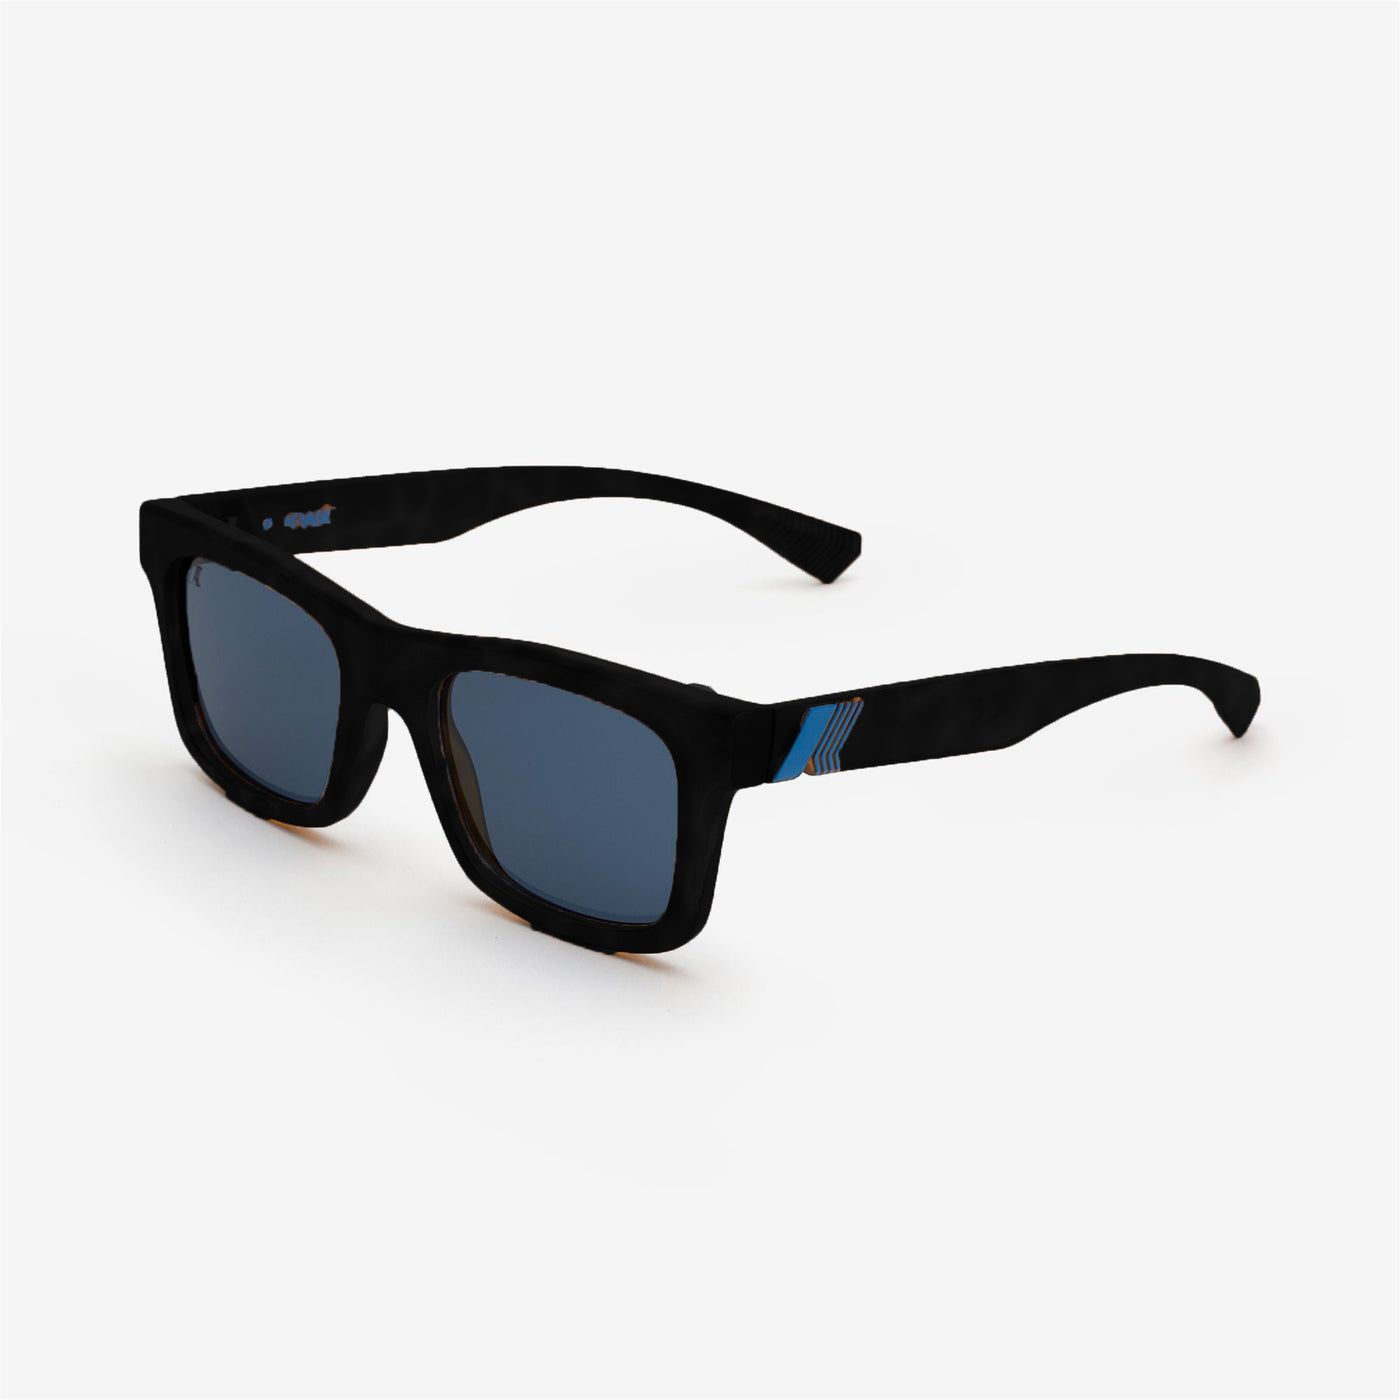 CAPITAINE - Glasses - Sunglasses - Man - Black